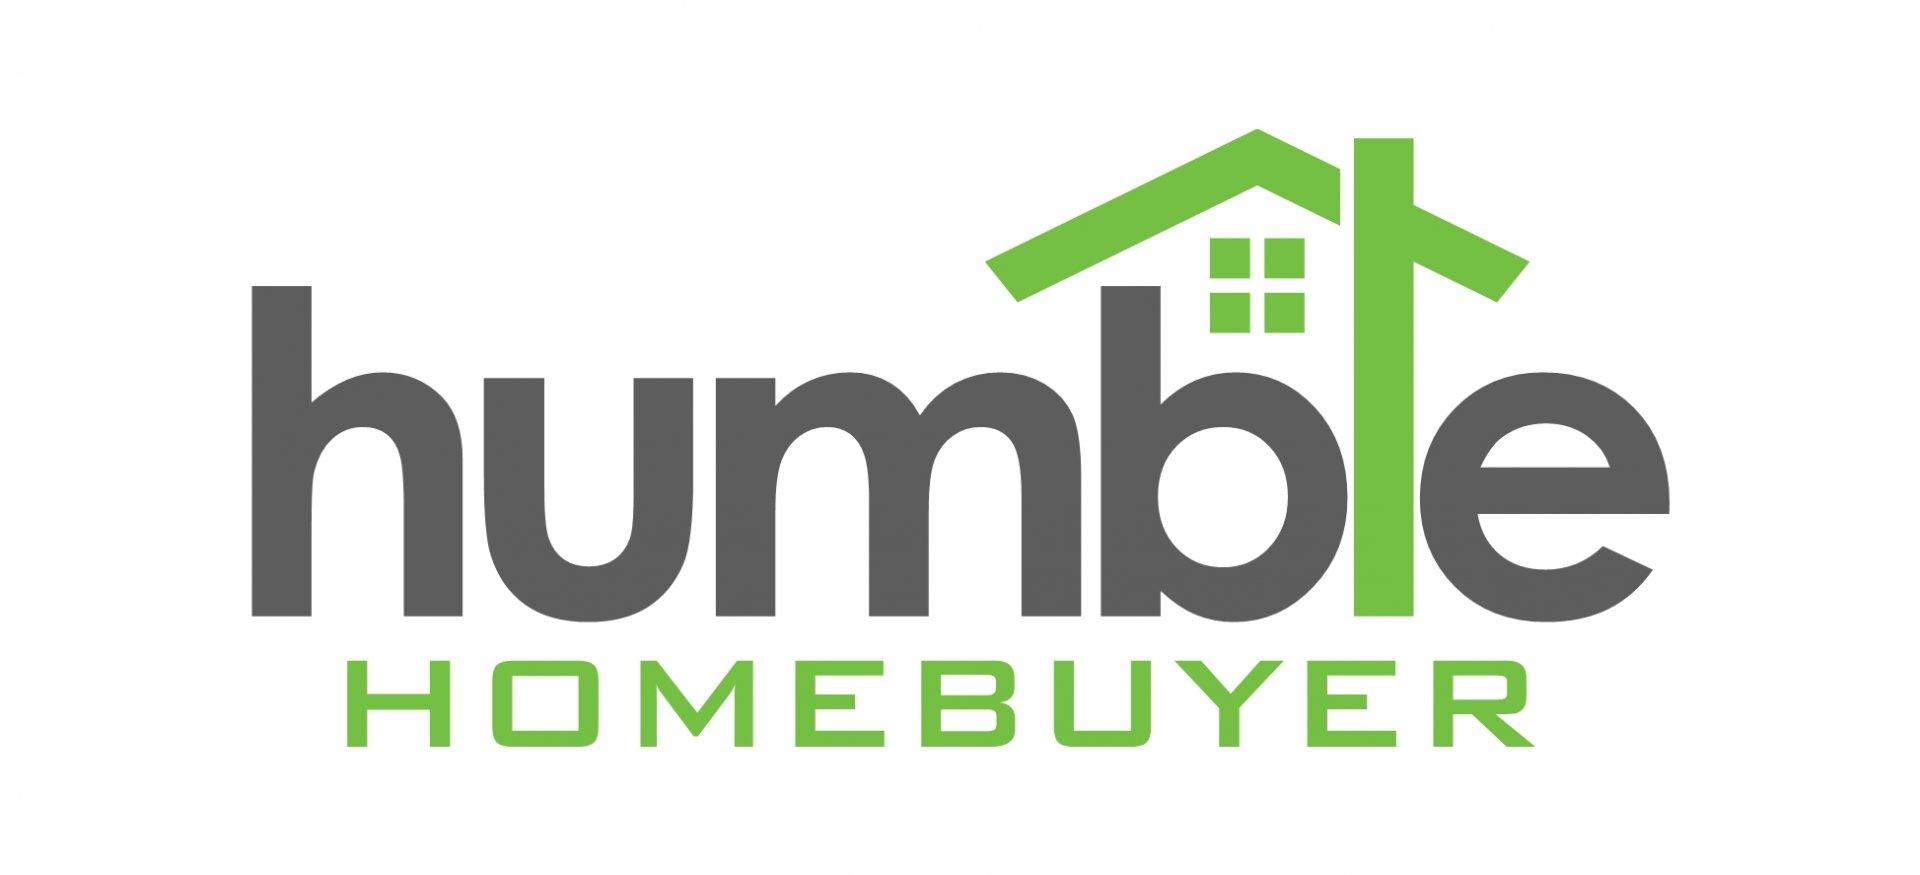 Humble Homebuyer  logo